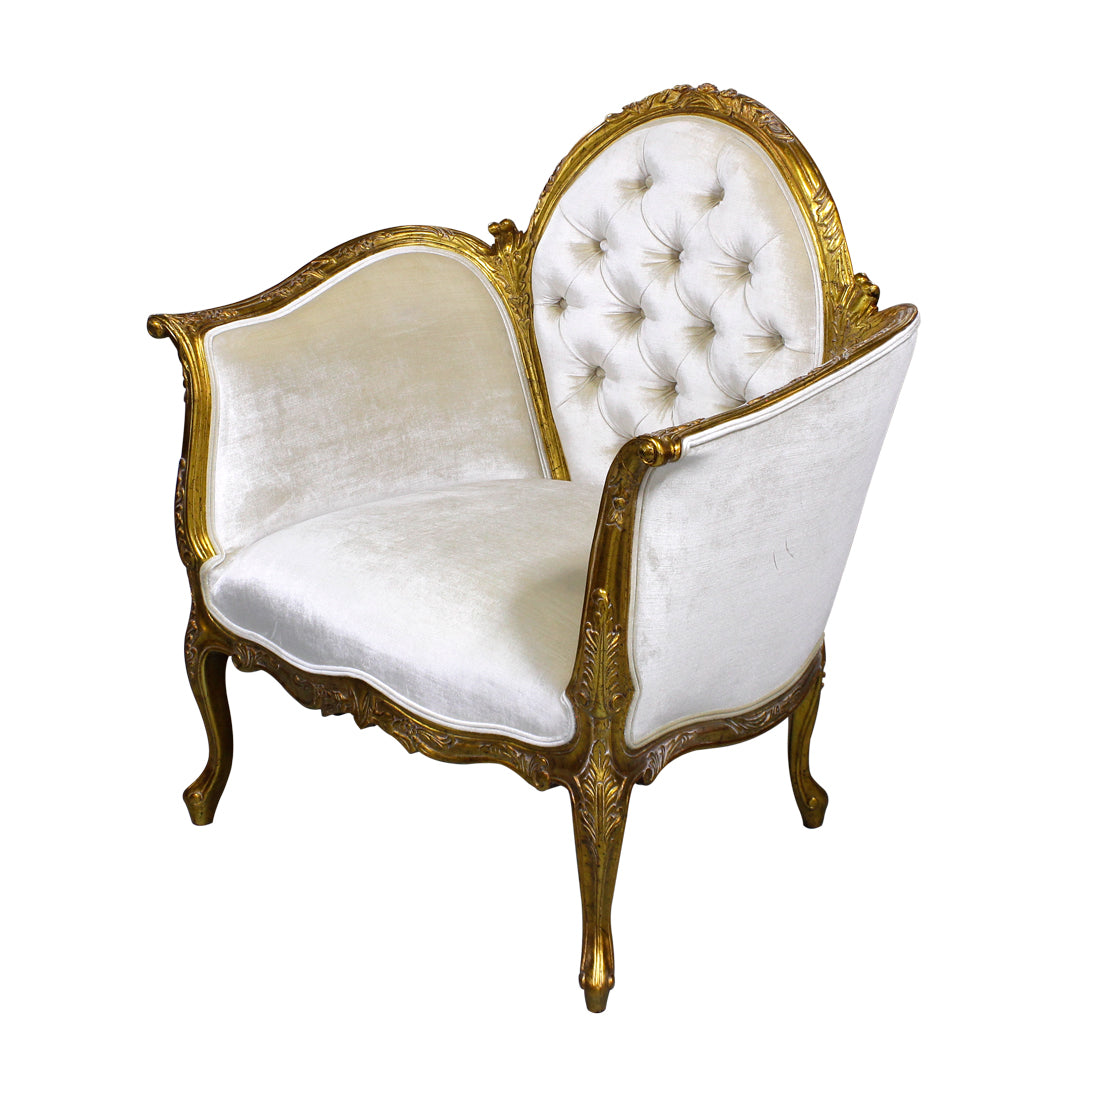 Louis XV Bordeaux Arm Chair - Ivory